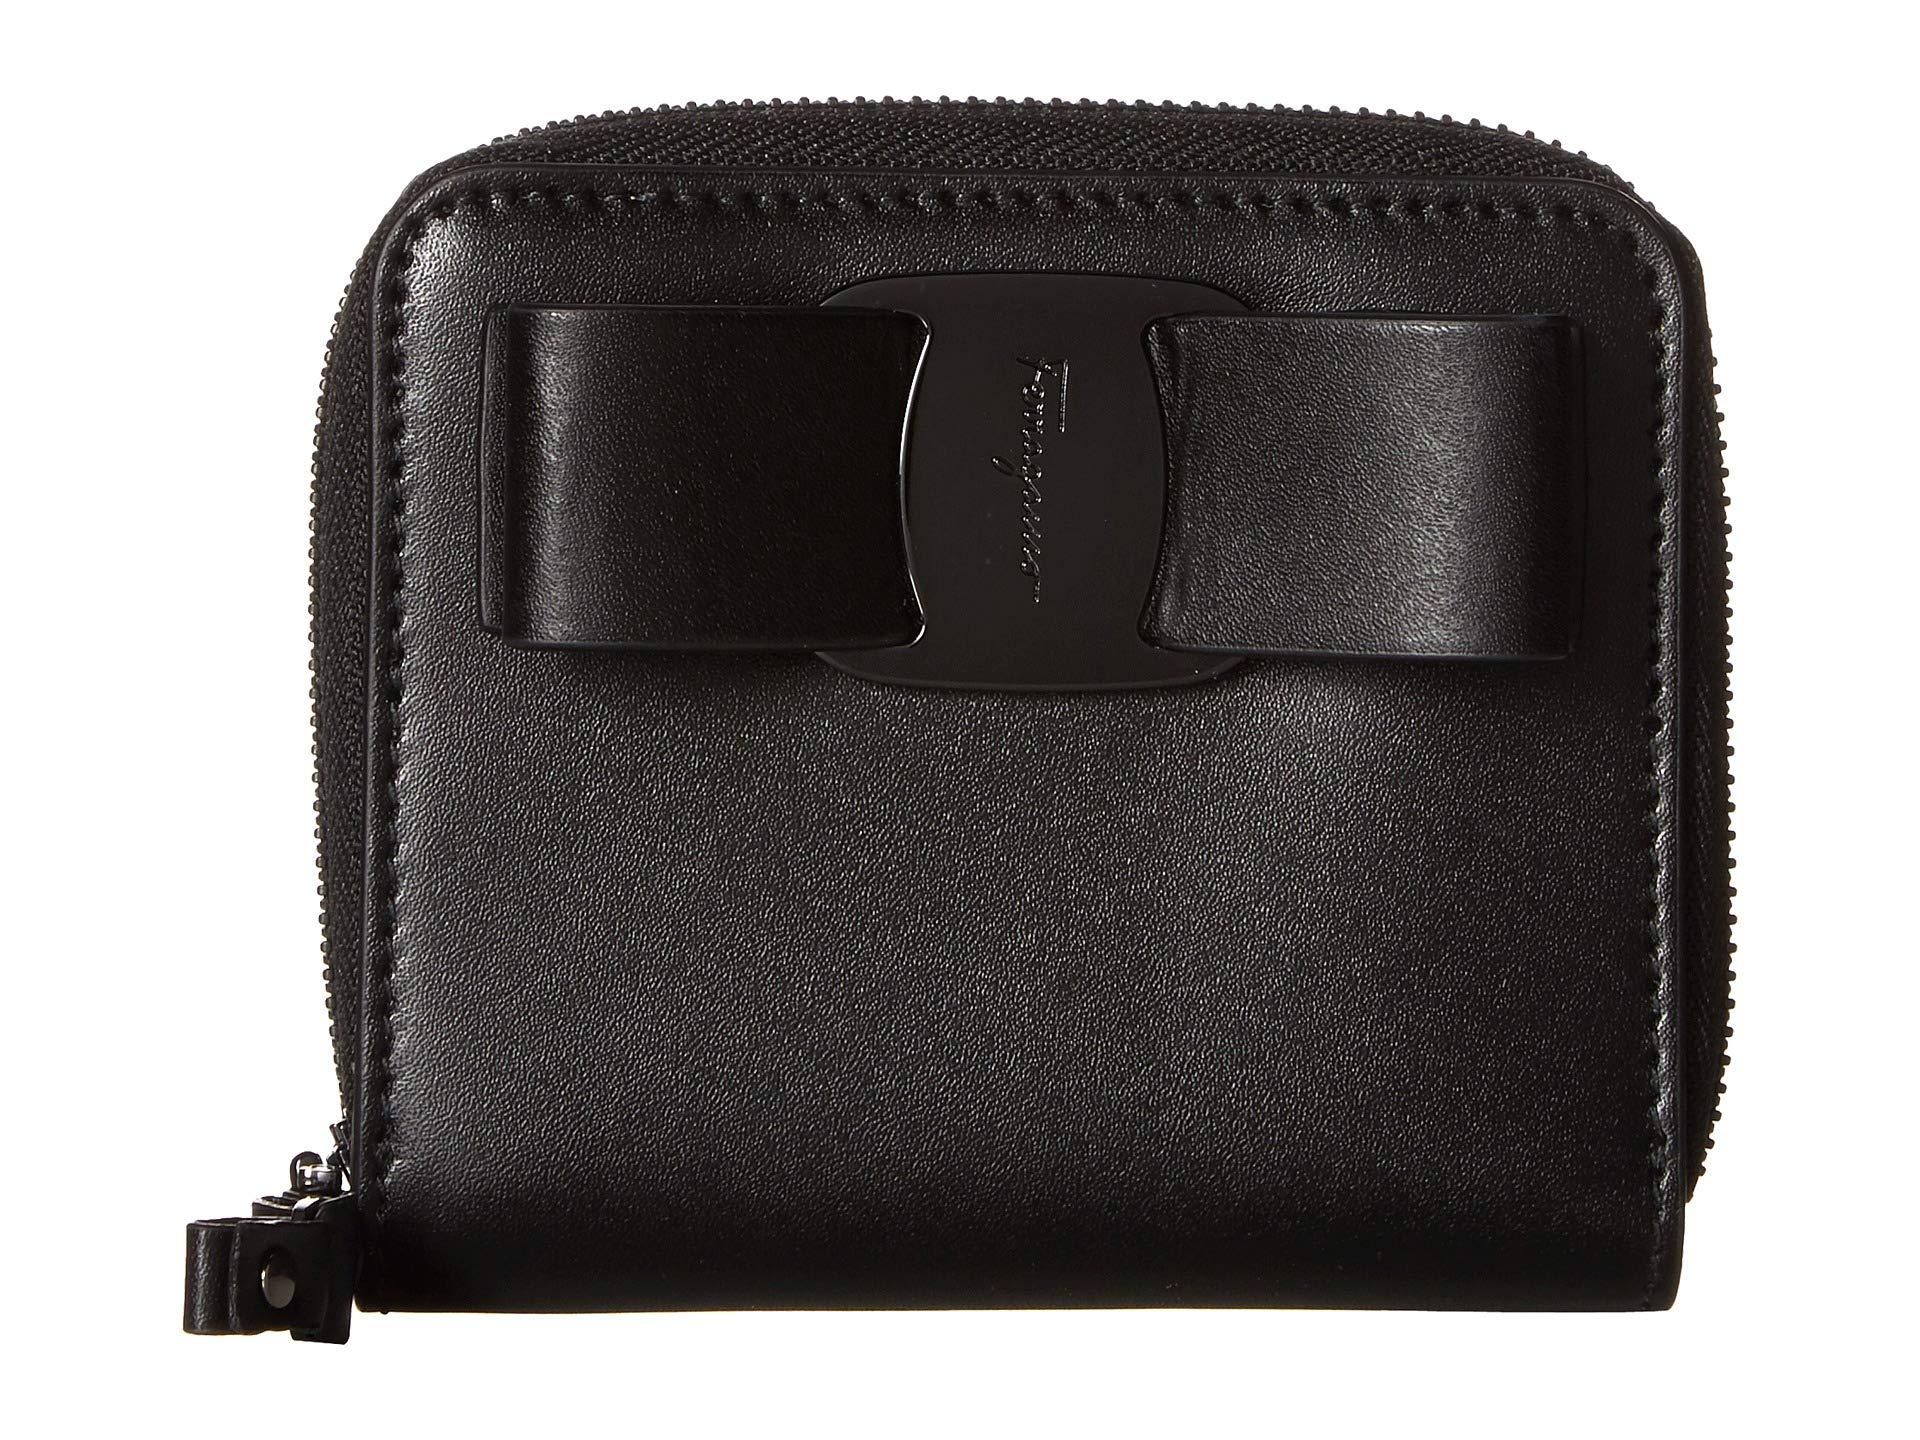 Ferragamo Leather Vara Compant Bow Zip Around Wallet in Black - Lyst